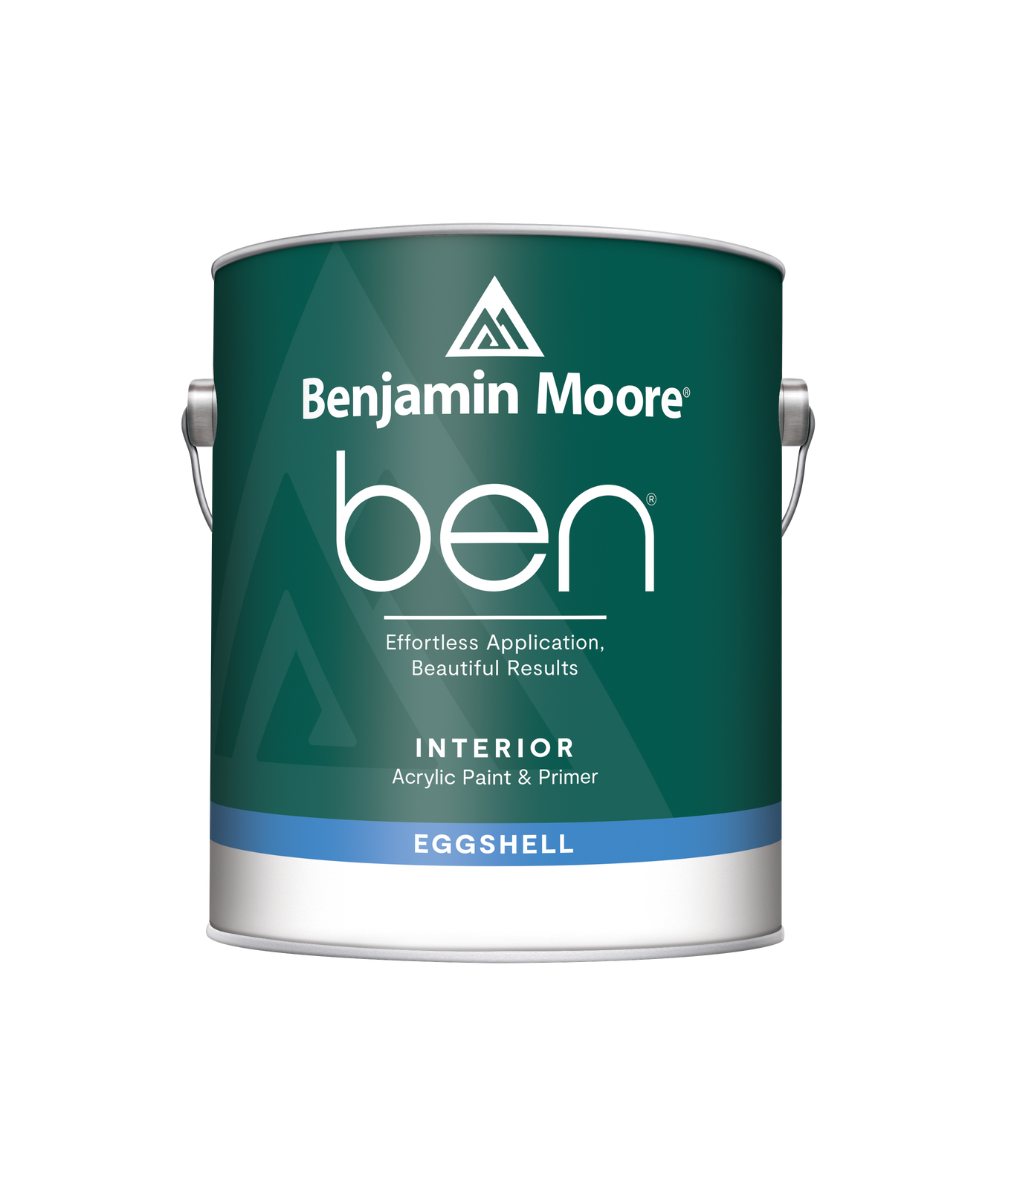 Benjamin Moore ben® Interior Paint in a Eggshell finish at Southwestern Paint Houston, TX.